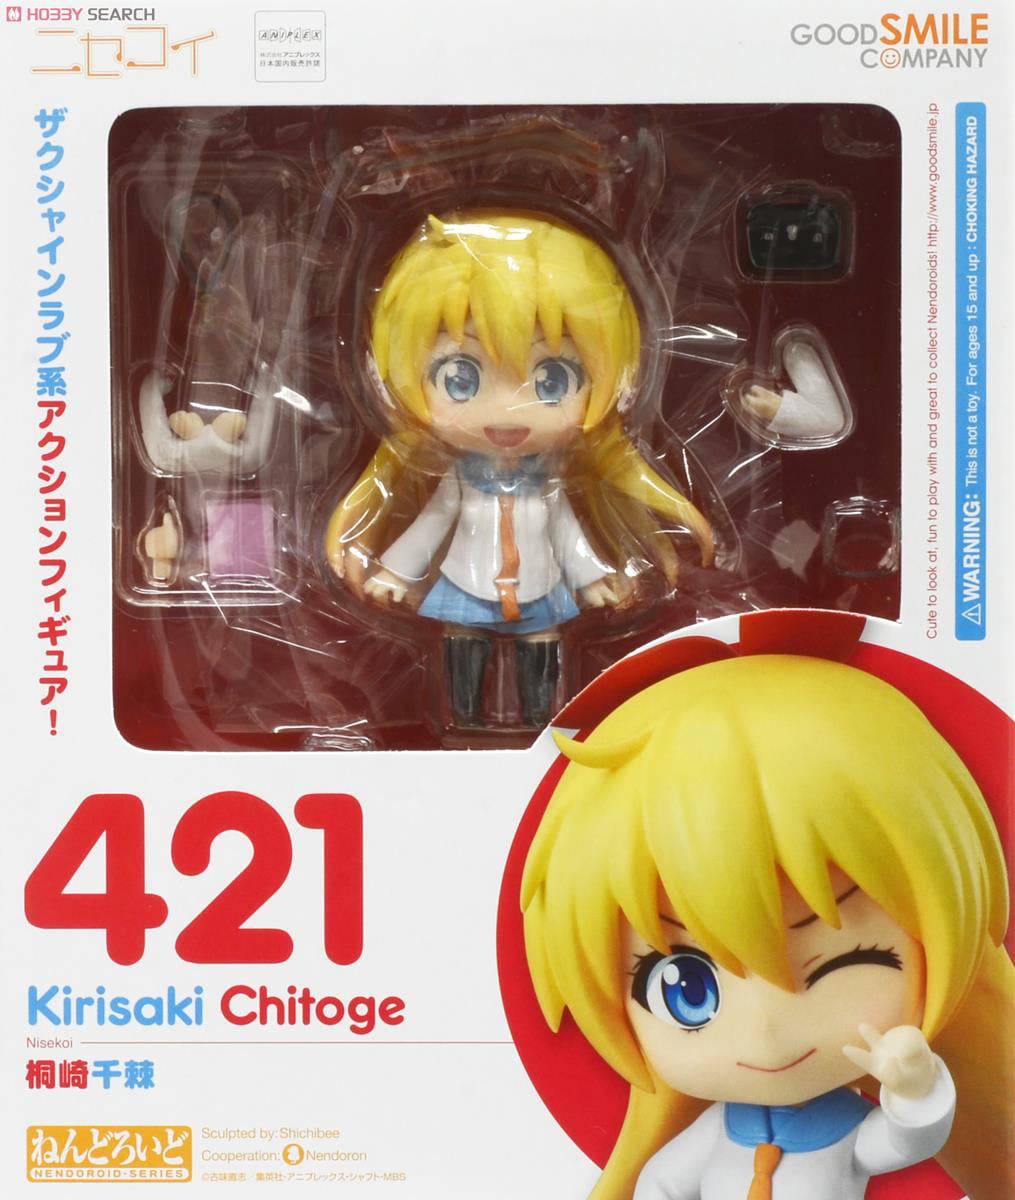 Nendoroid 421 Chitoge Kirisaki Figure anime Nisekoi Good Smile Company